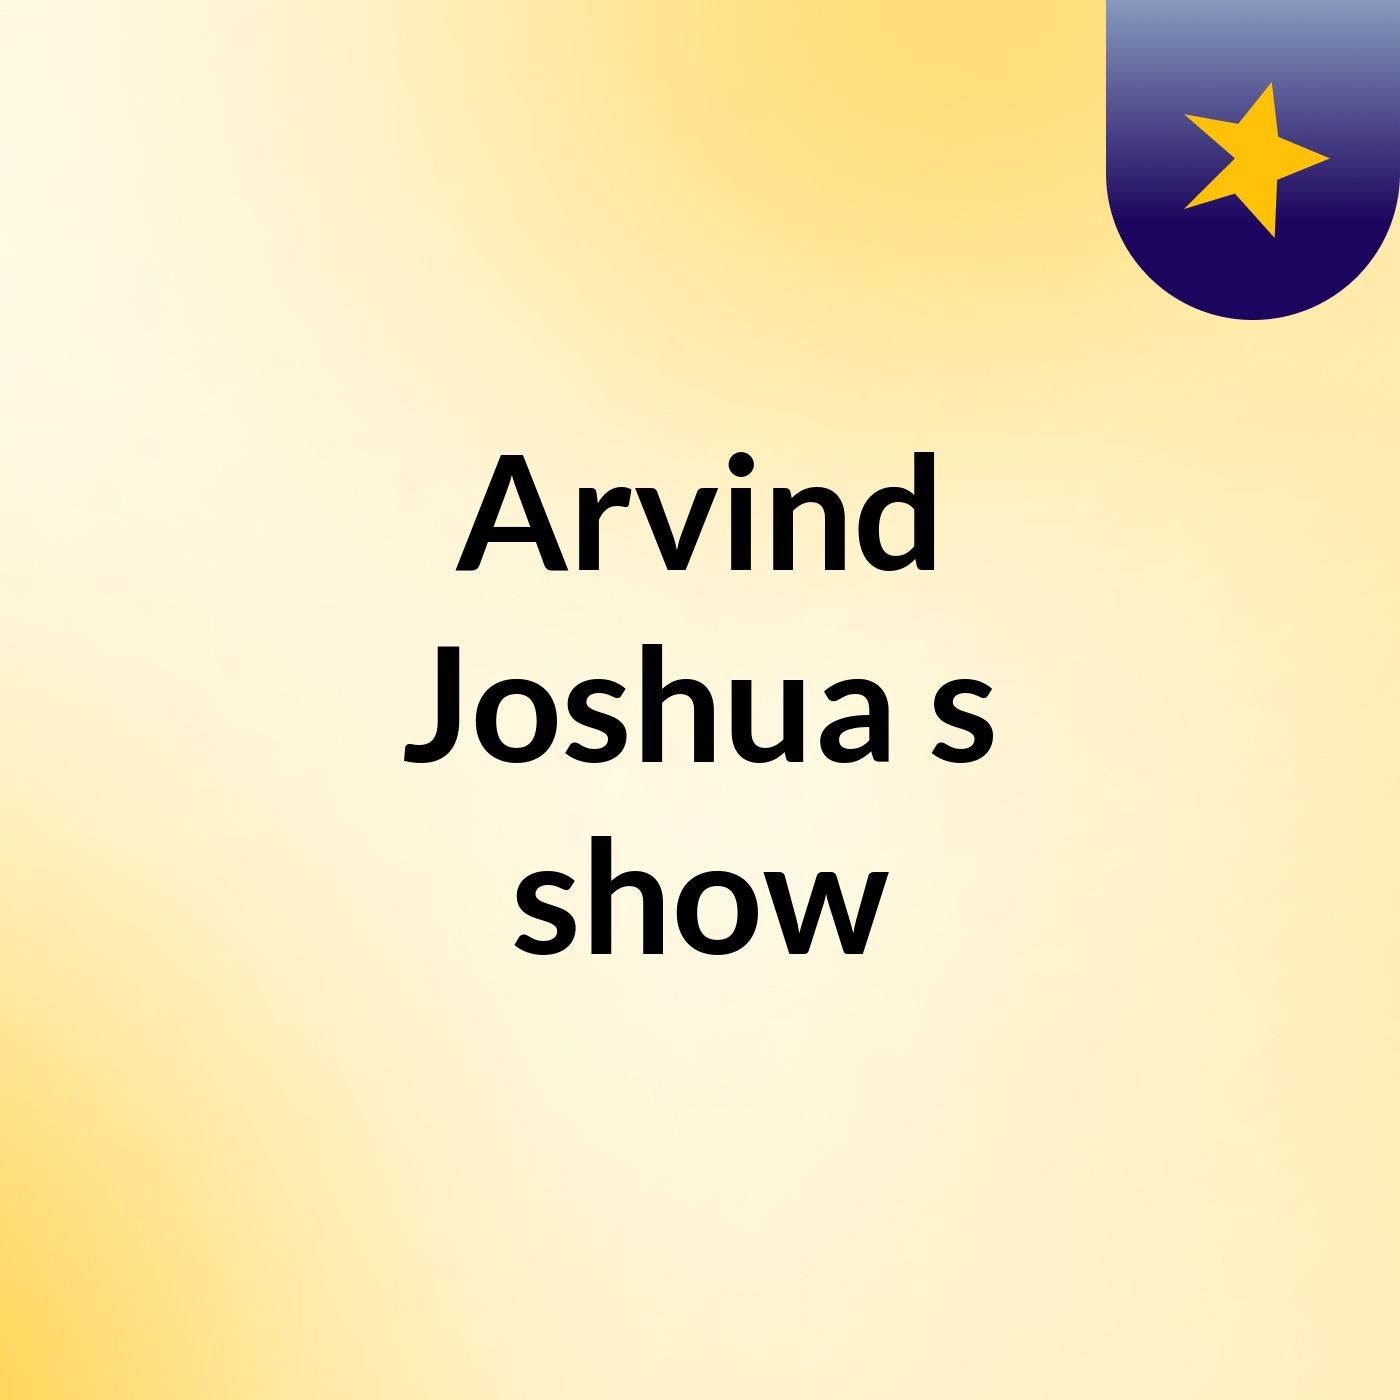 Arvind Joshua's show